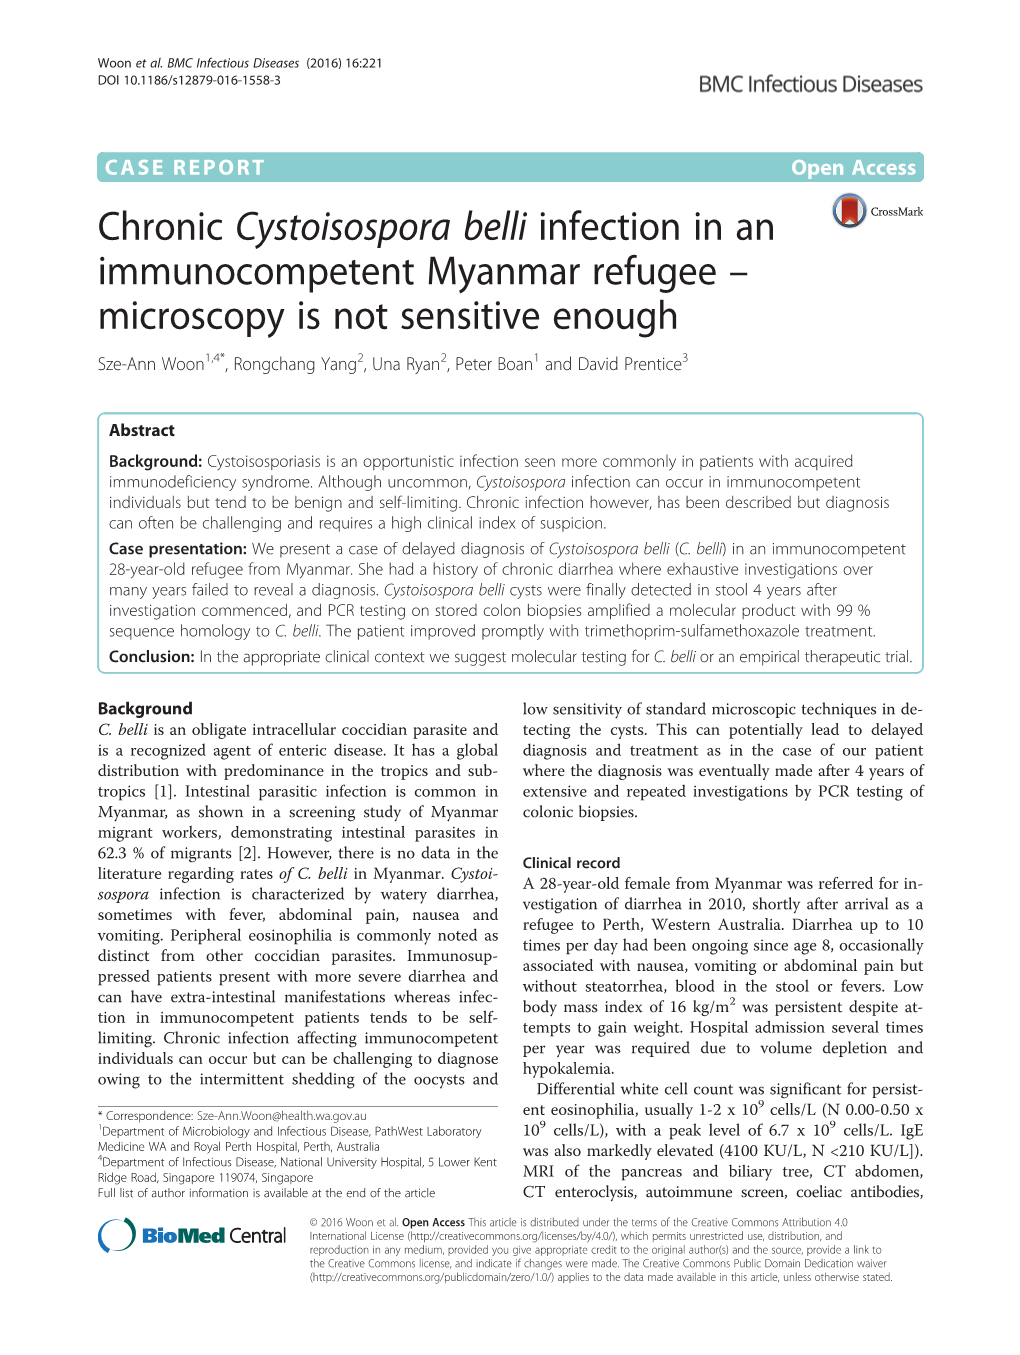 Chronic Cystoisospora Belli Infection in An